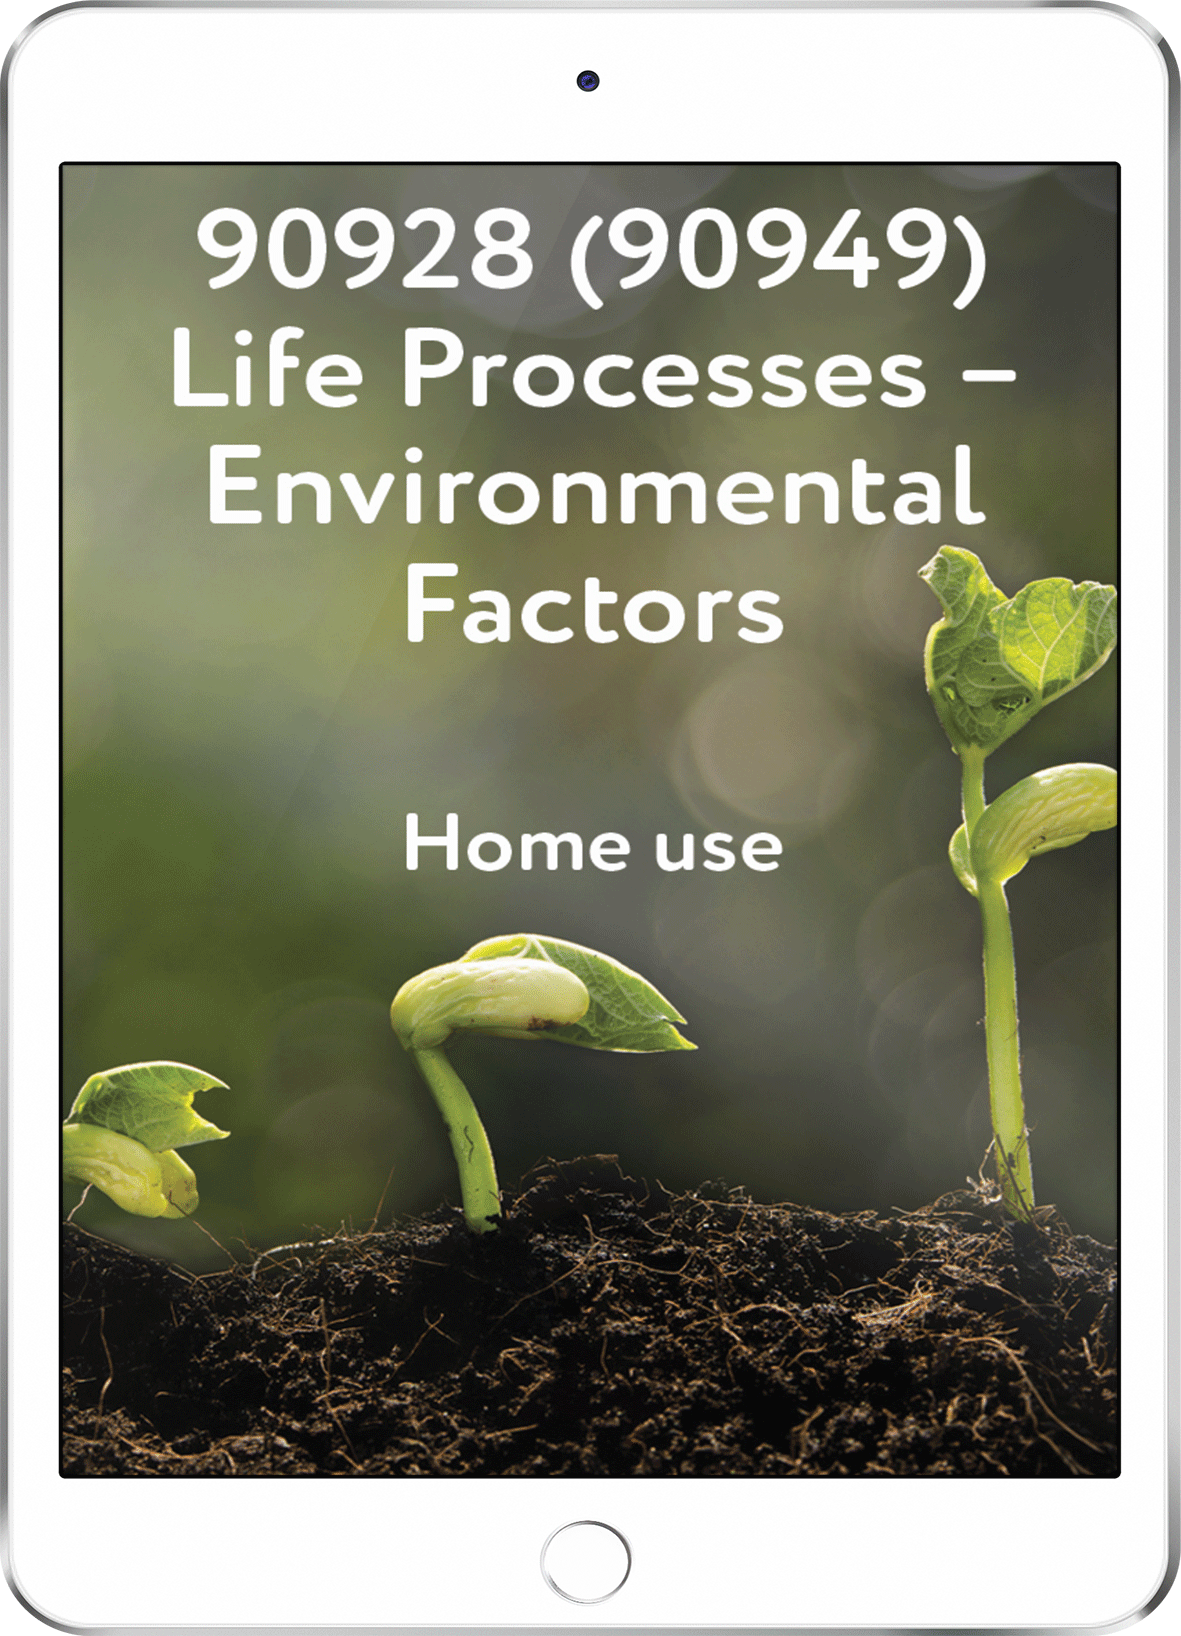 90928 (90949) Life Process-Environ Factors - Home Use